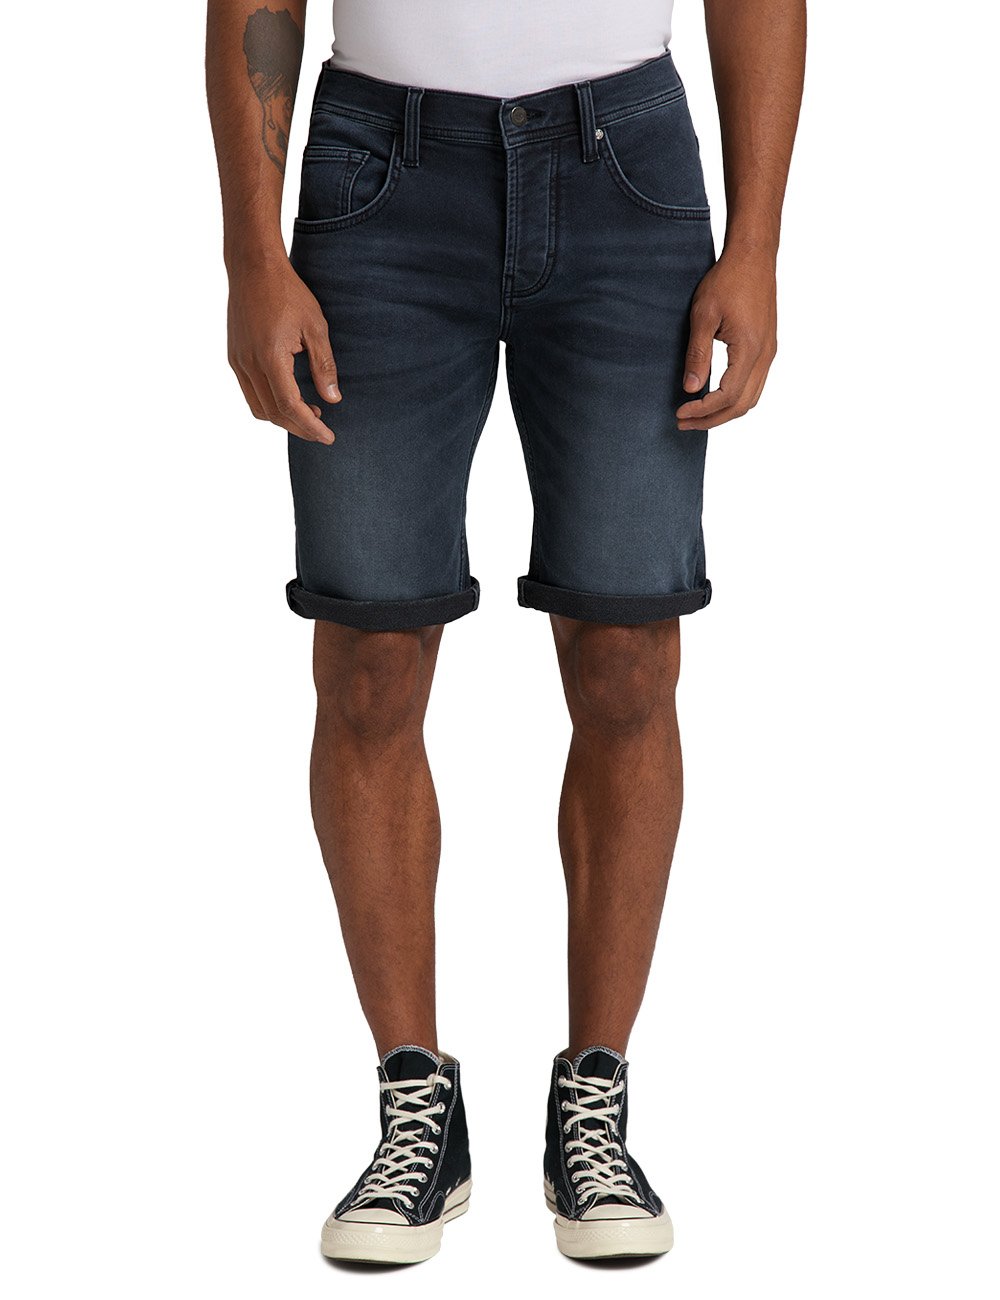 Jeans Shorts - aktuelle Modetrends shoppen online jetzt